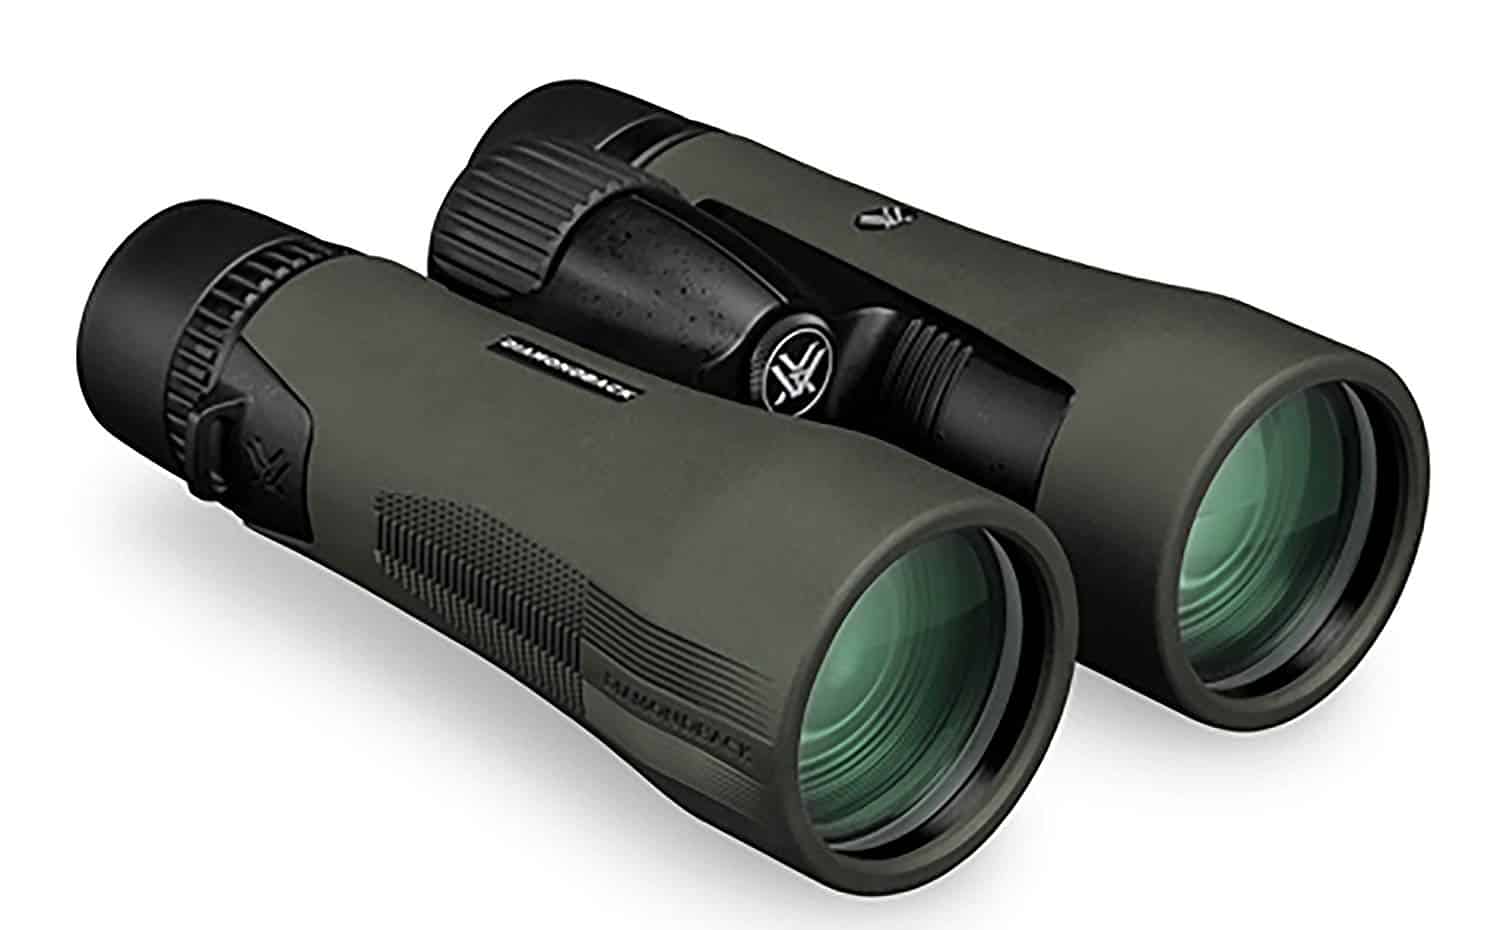  Vortex  Diamondback 12x50 Review  Binoculars Insights